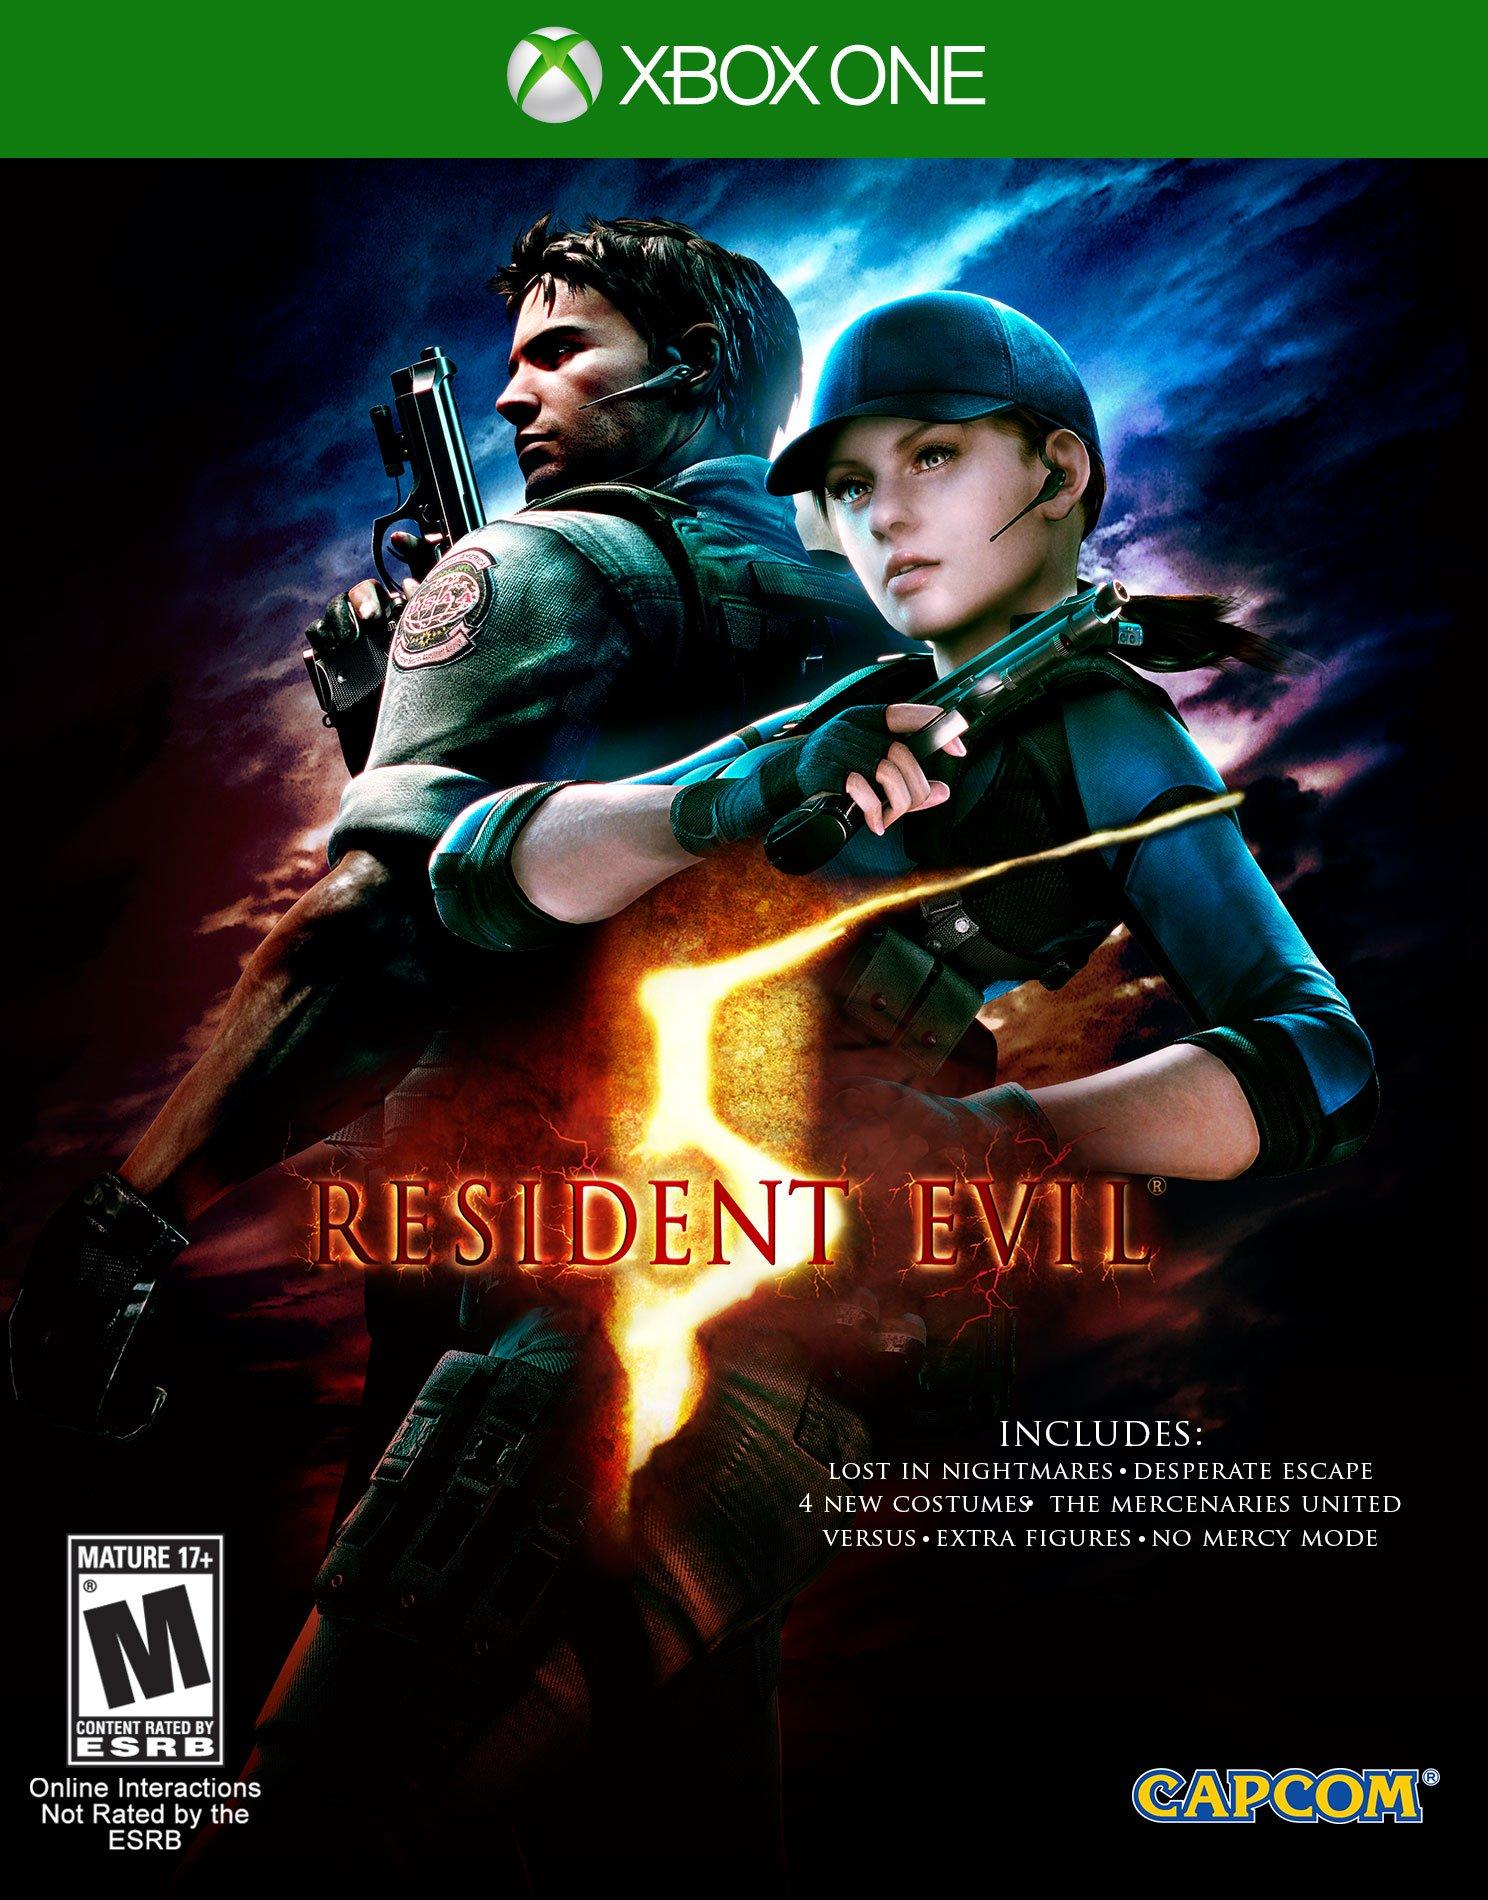 Resident evil 5 HD Xbox digital download $8 at Gamestop